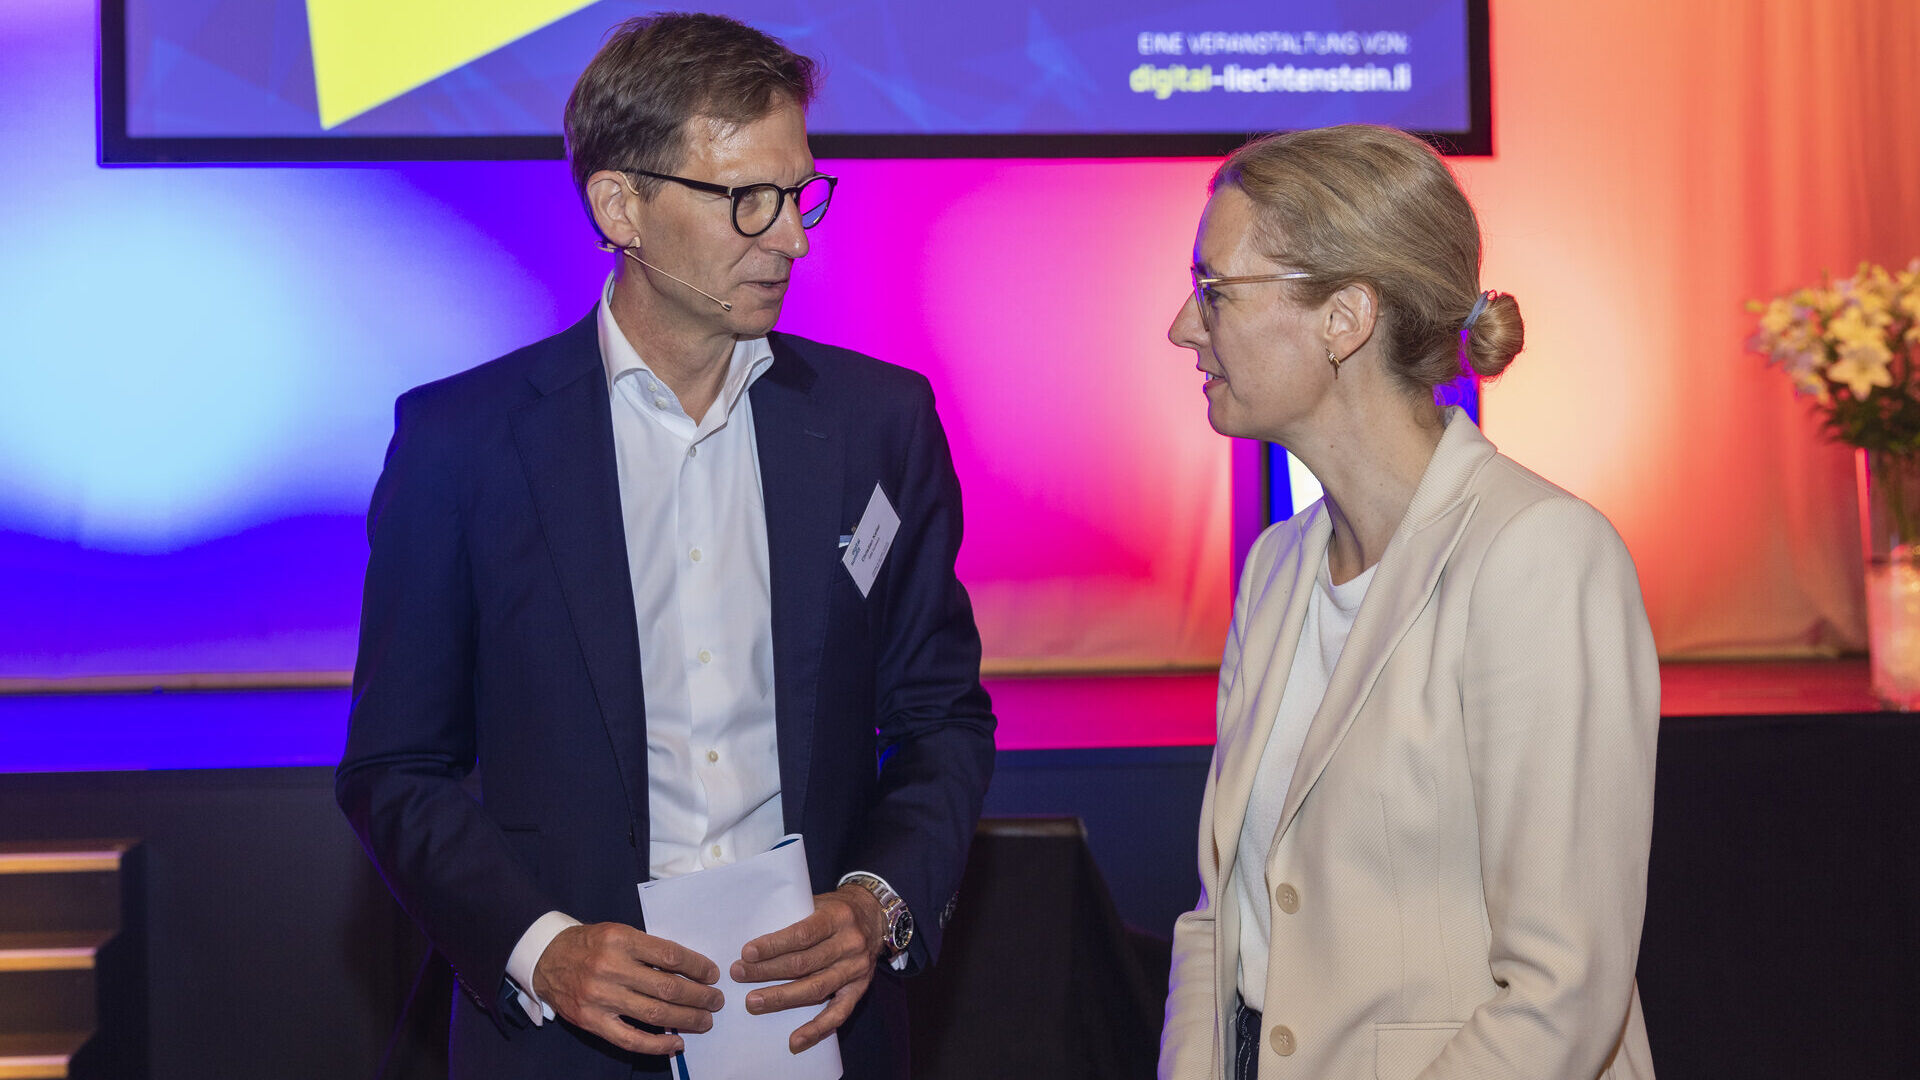 Digital Summit 2023: Christian Keller és Sabine Monauni